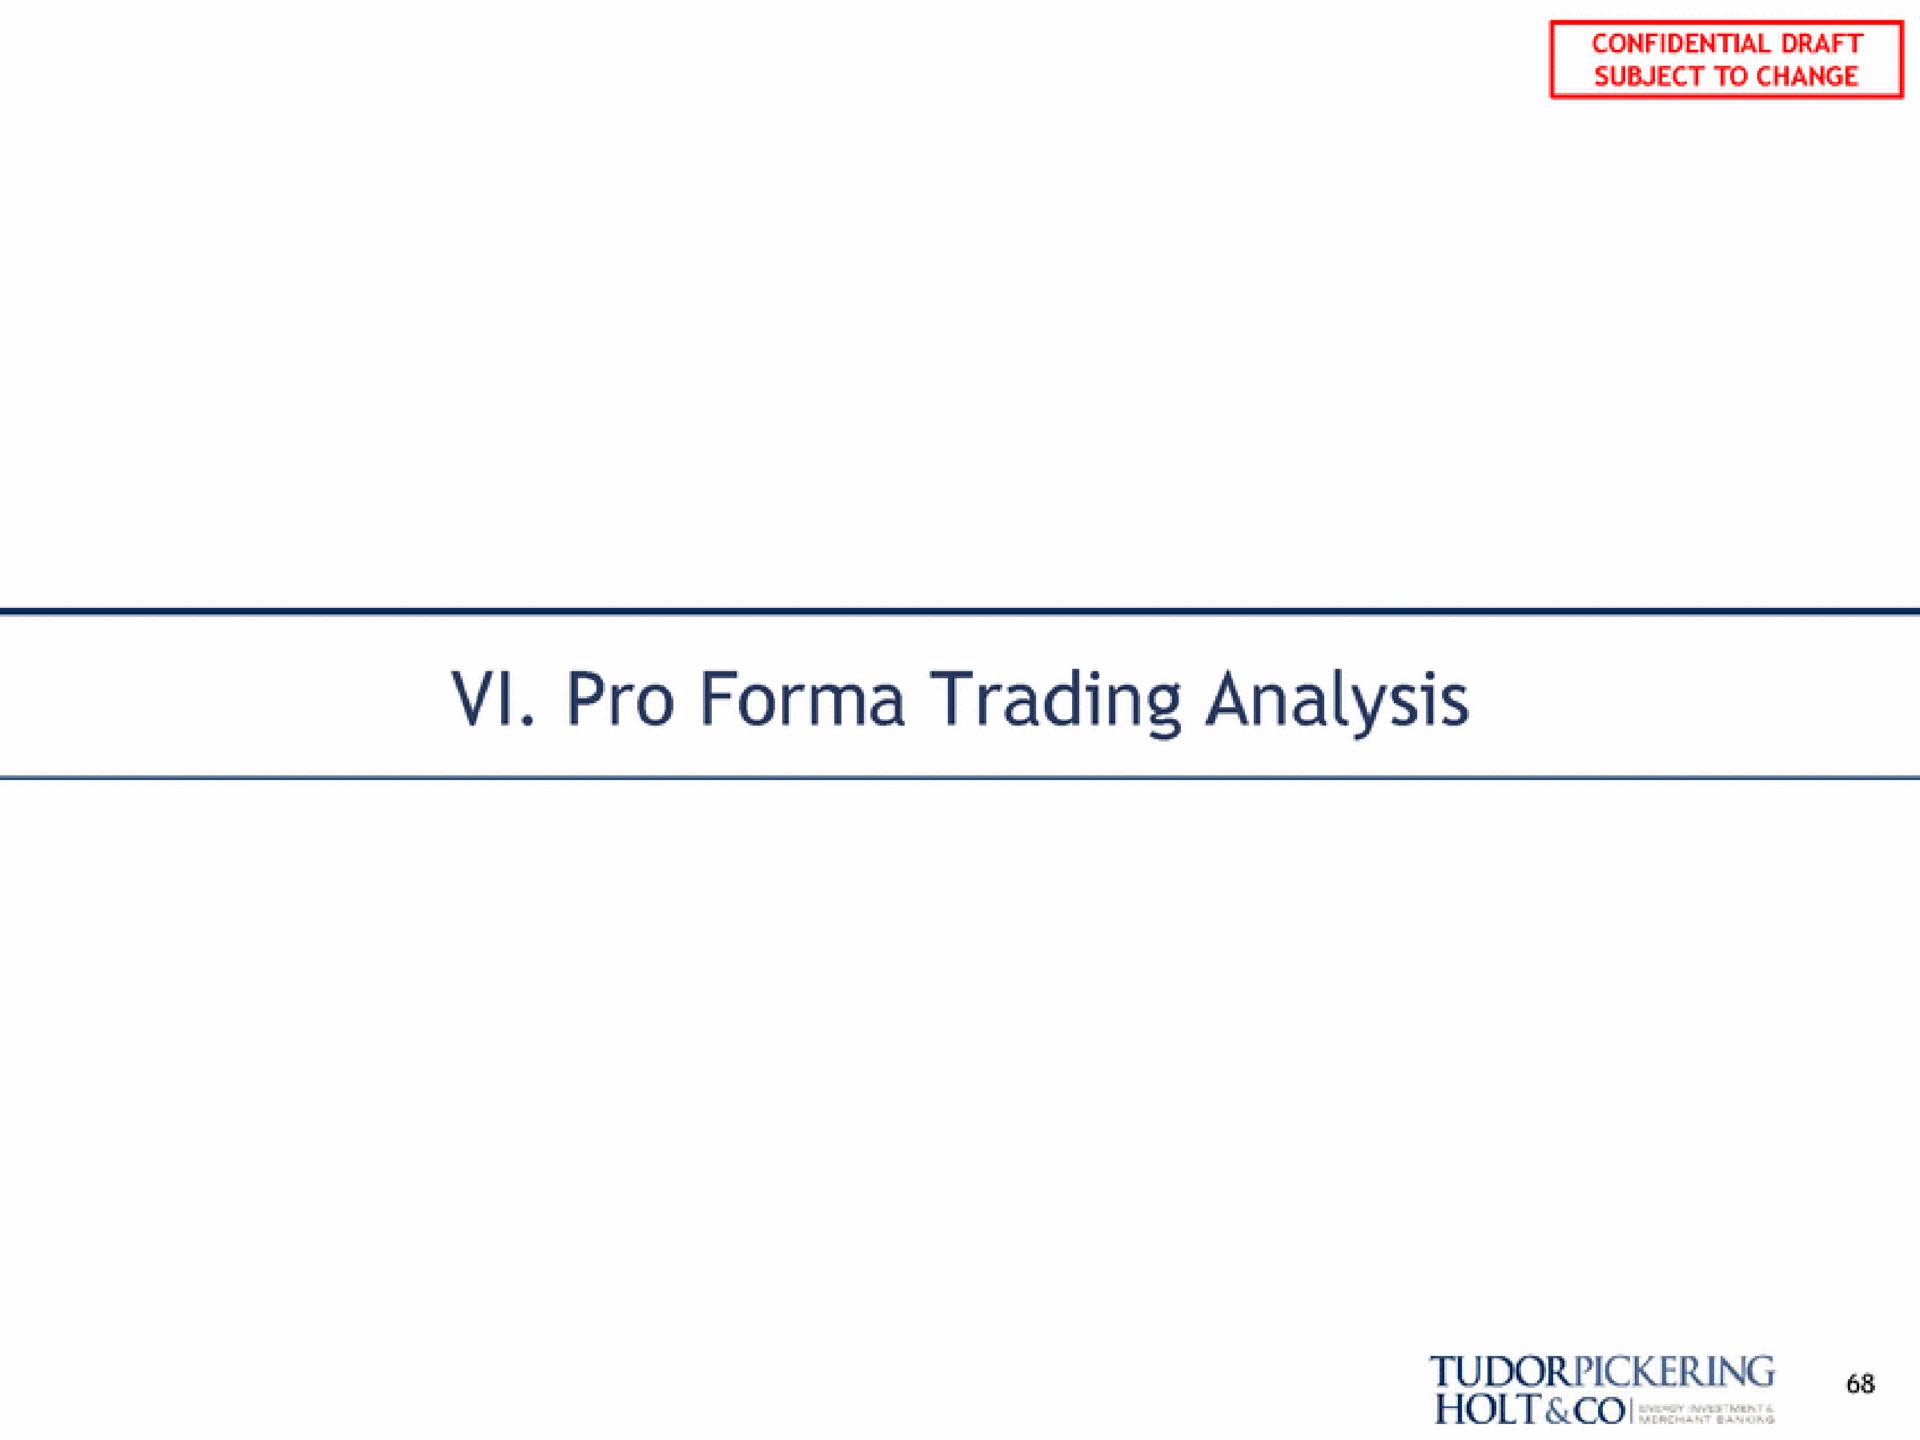 subject to change pro trading analysis | Tudor, Pickering, Holt & Co